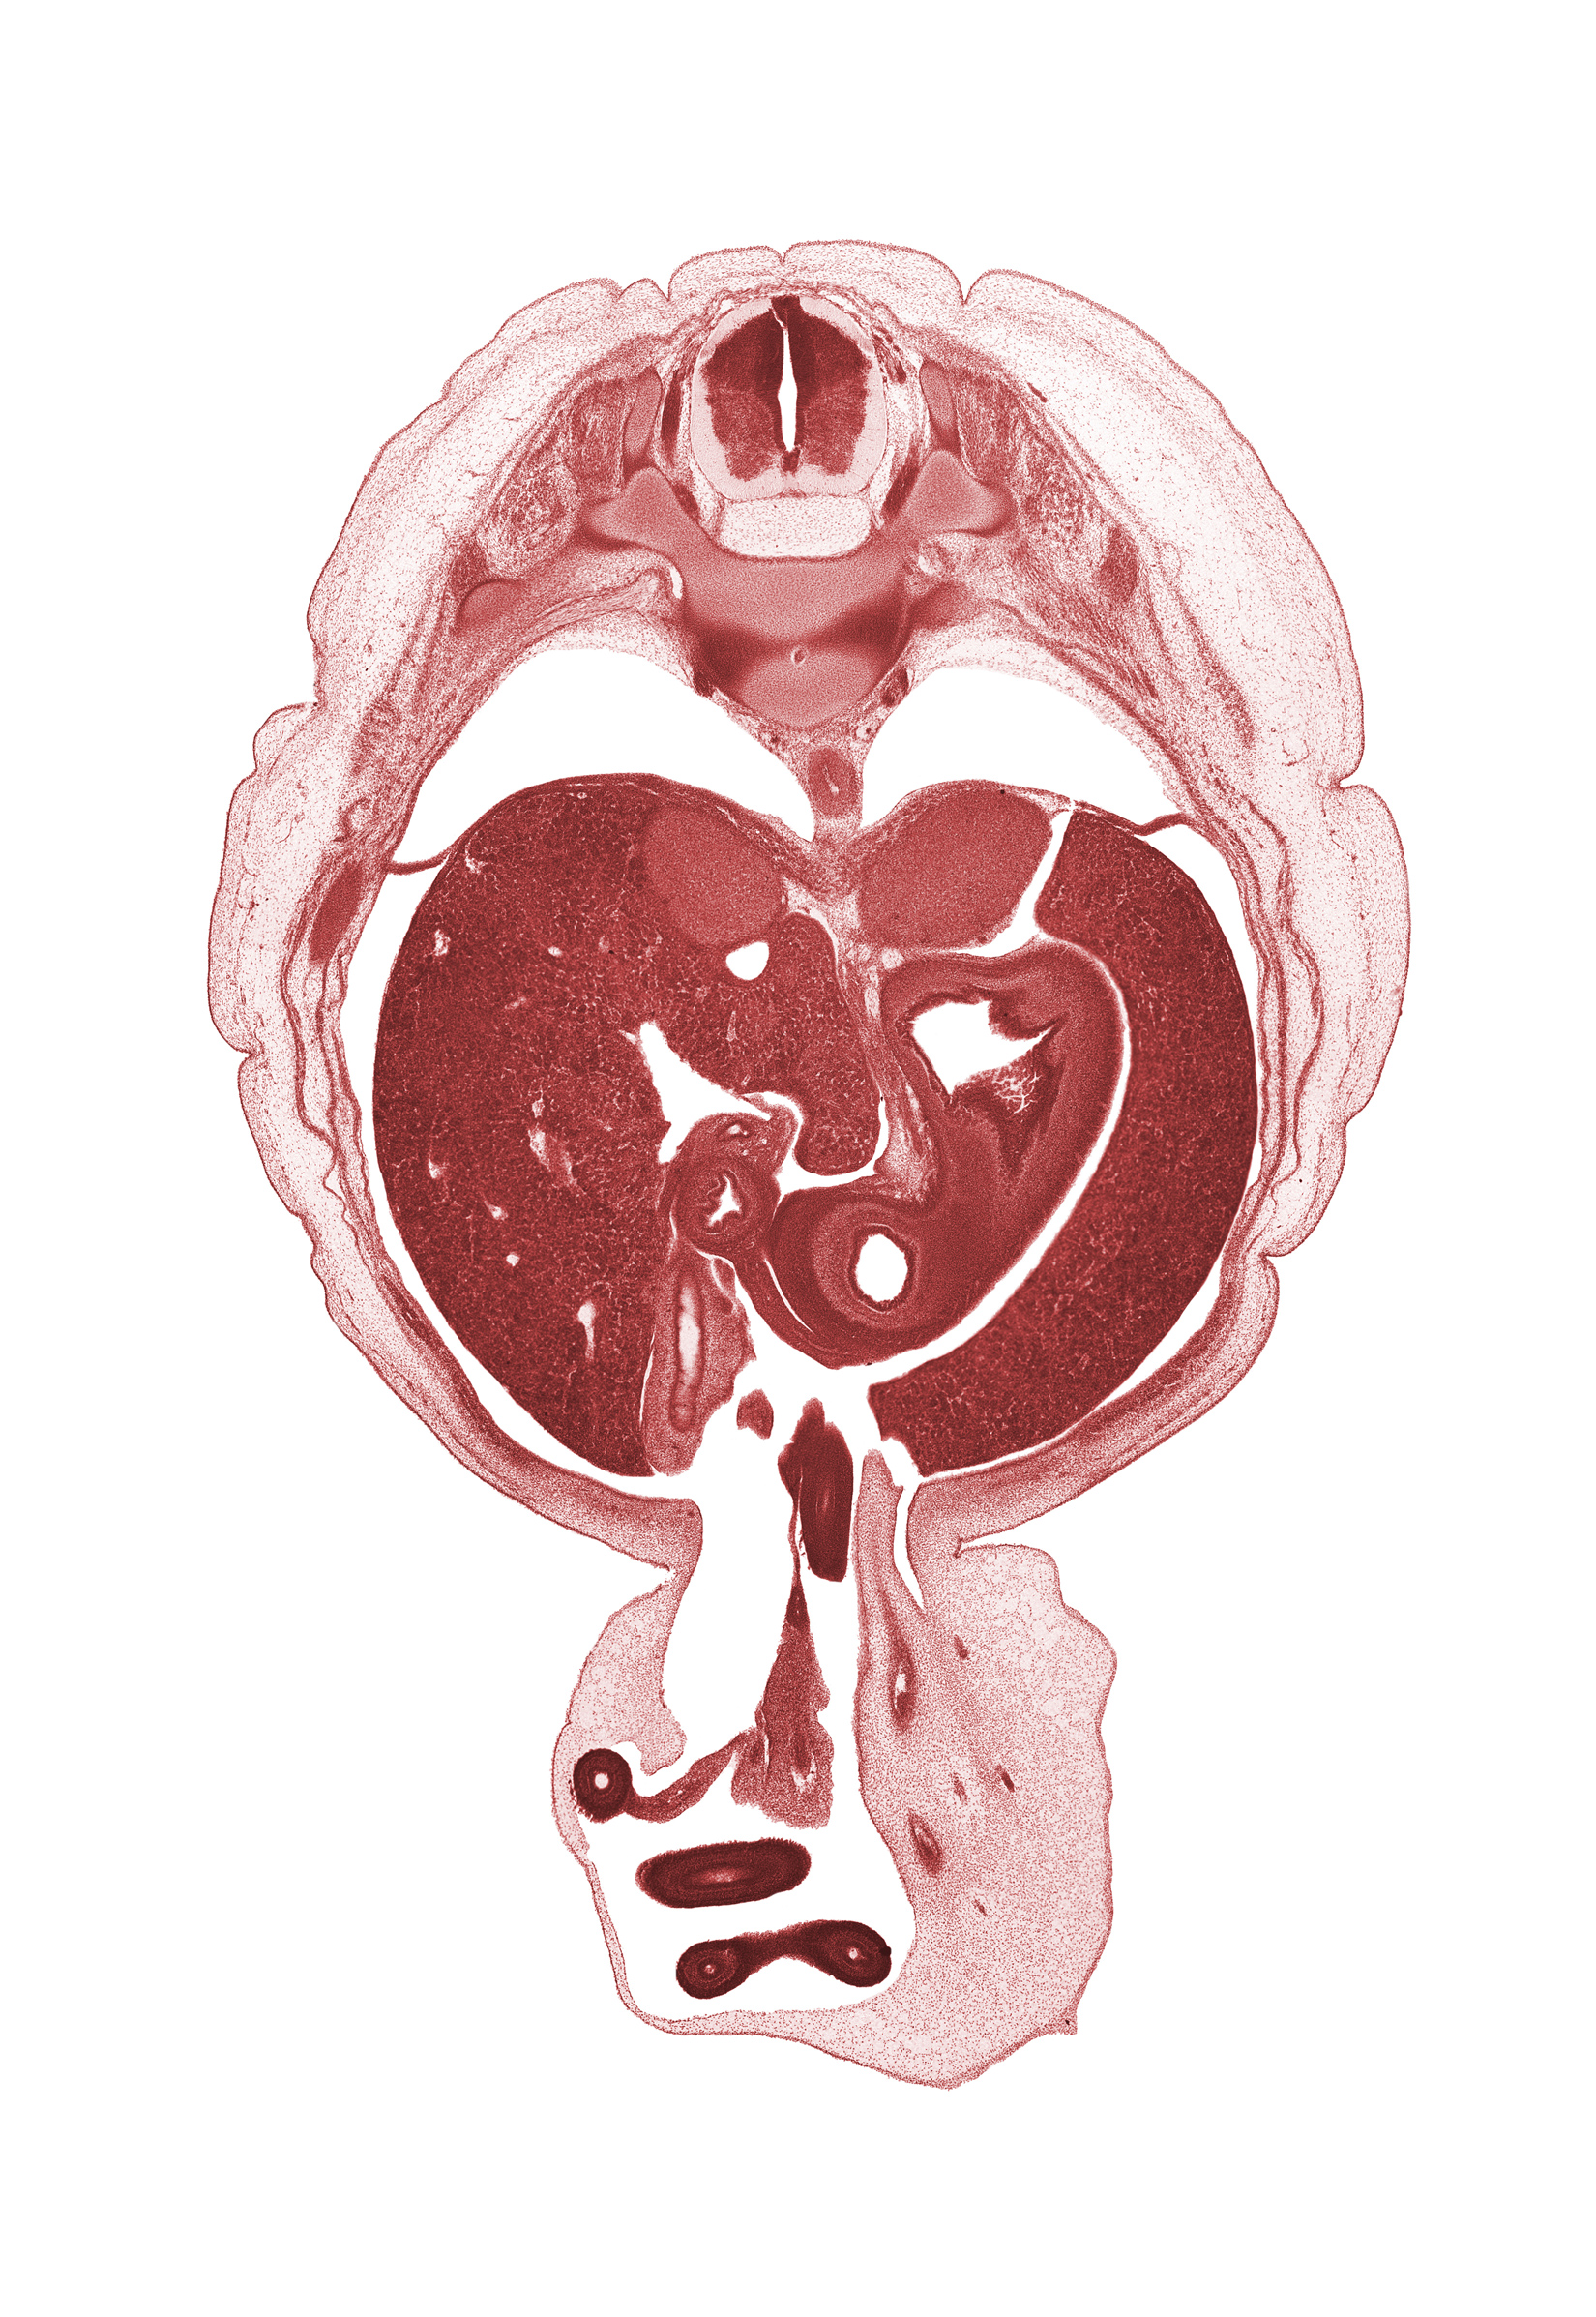 T-10 spinal ganglion, aorta, caudate lobe of liver, distal limb of herniated midgut, duodenum, gall bladder, head of rib 11, left umbilical artery, lesser curvature of stomach, lesser sac (omental bursa), mesentery, proximal limb of herniated midgut, pyloric antrum of stomach, right umbilical artery, sympathetic trunk